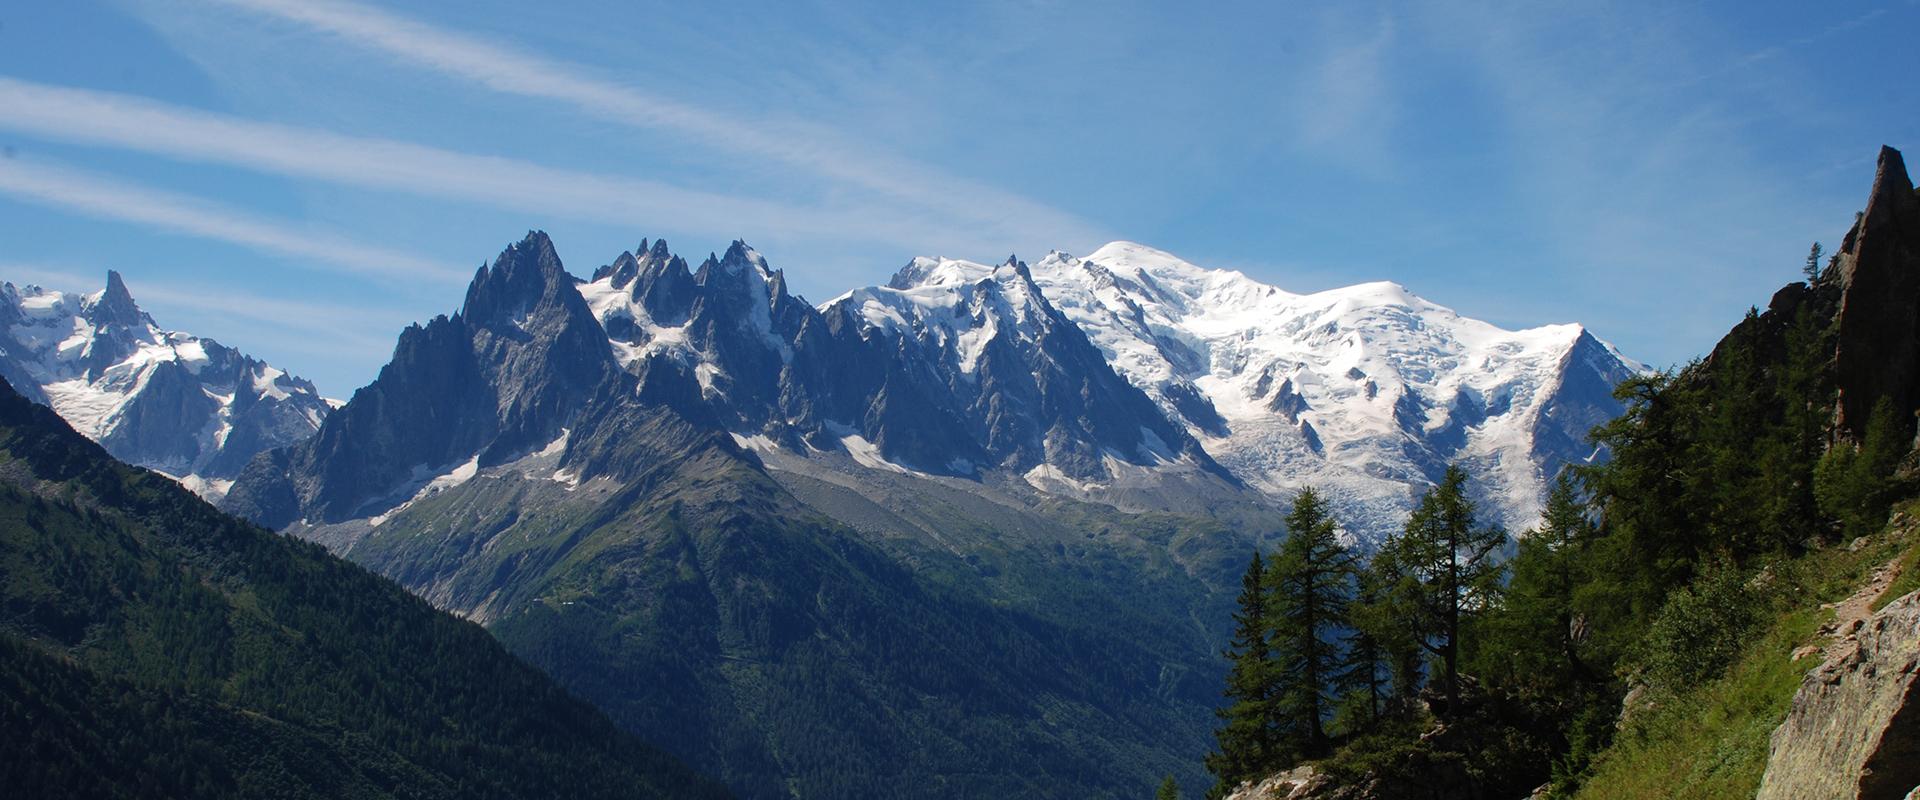 The needles of Chamonix and Mont-Blanc, Haute-Savoie